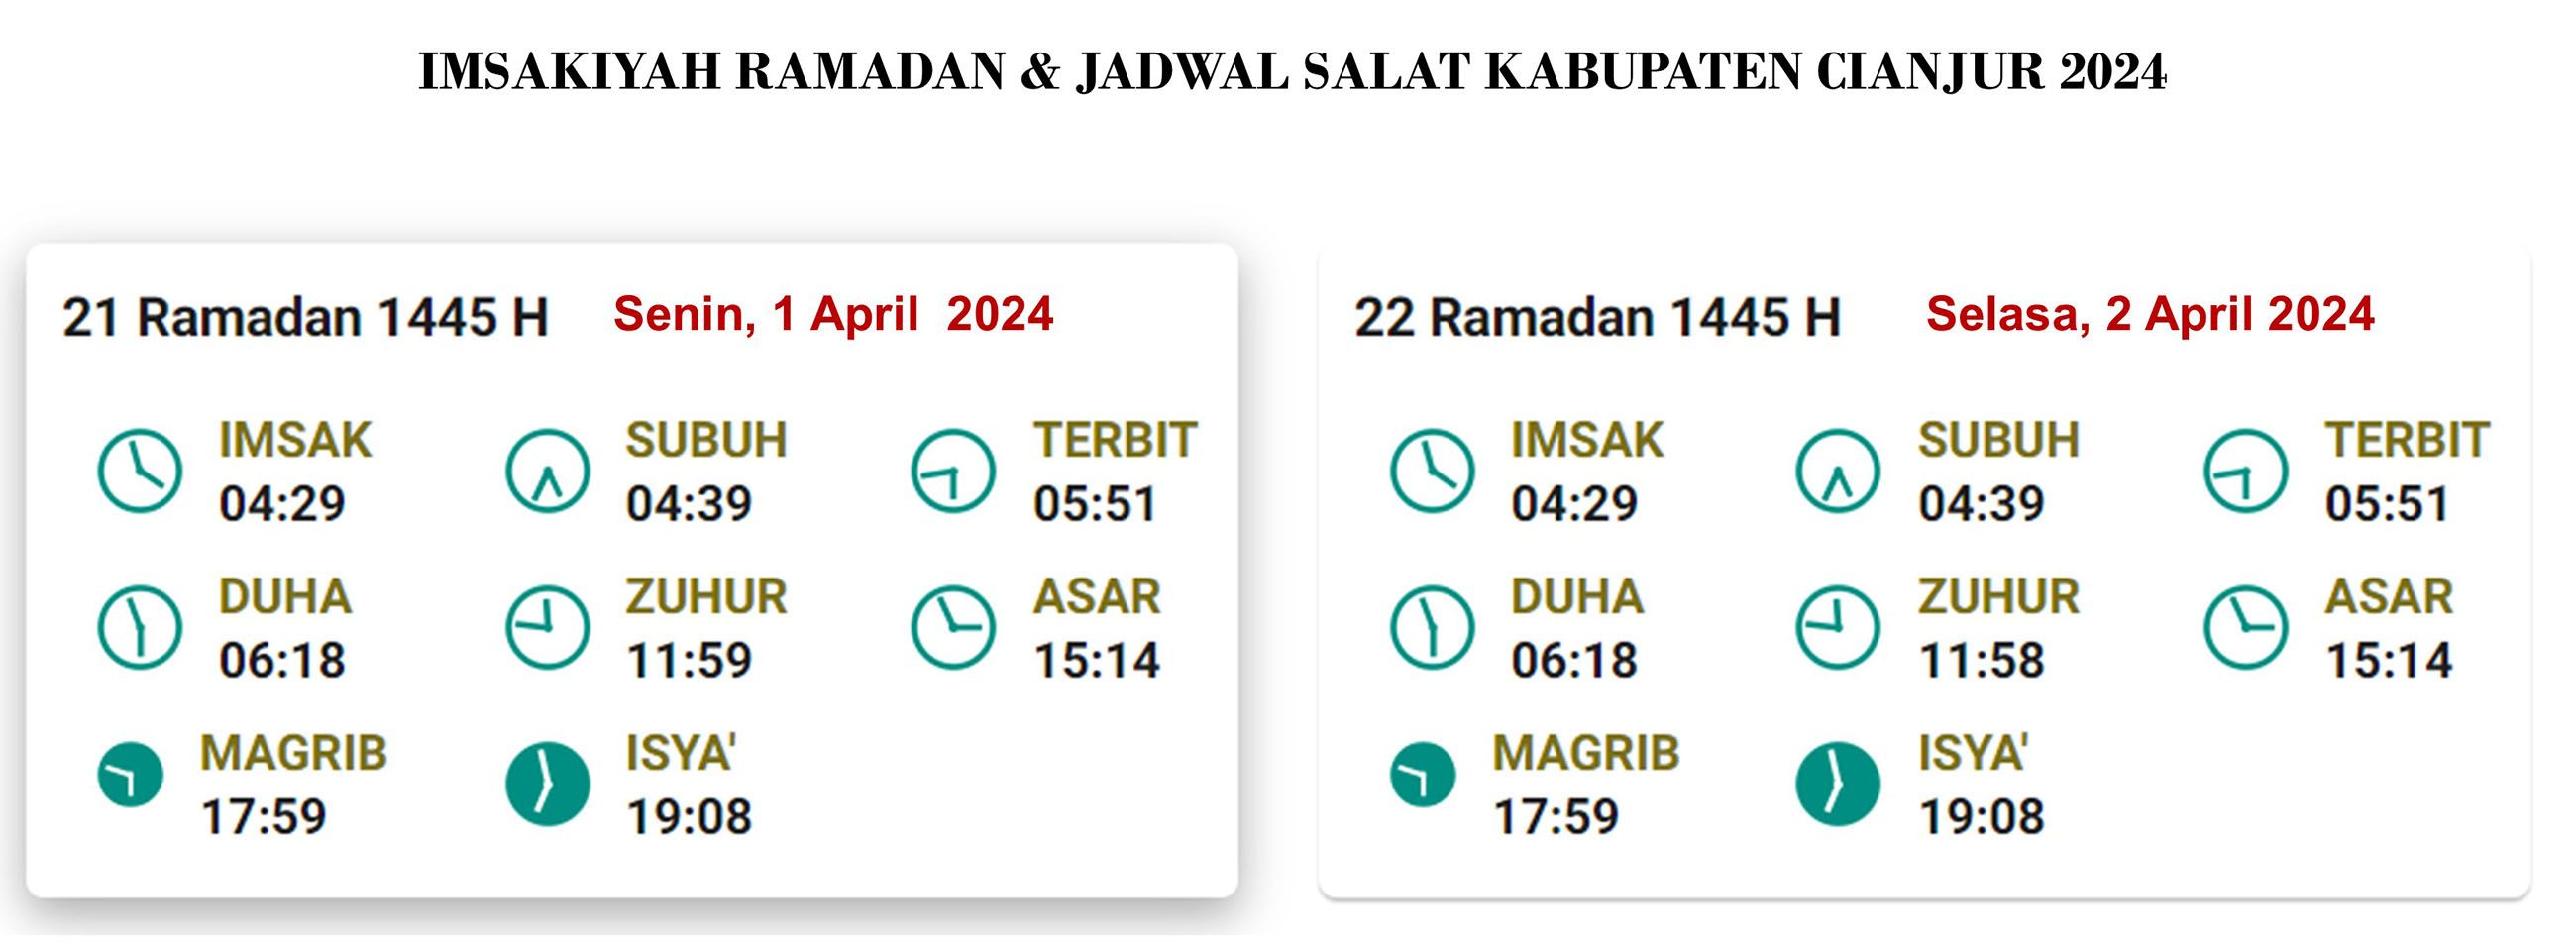 Cianjur, Jadwal Imsakiyah dan Salat, Selasa, 2 April 2024 